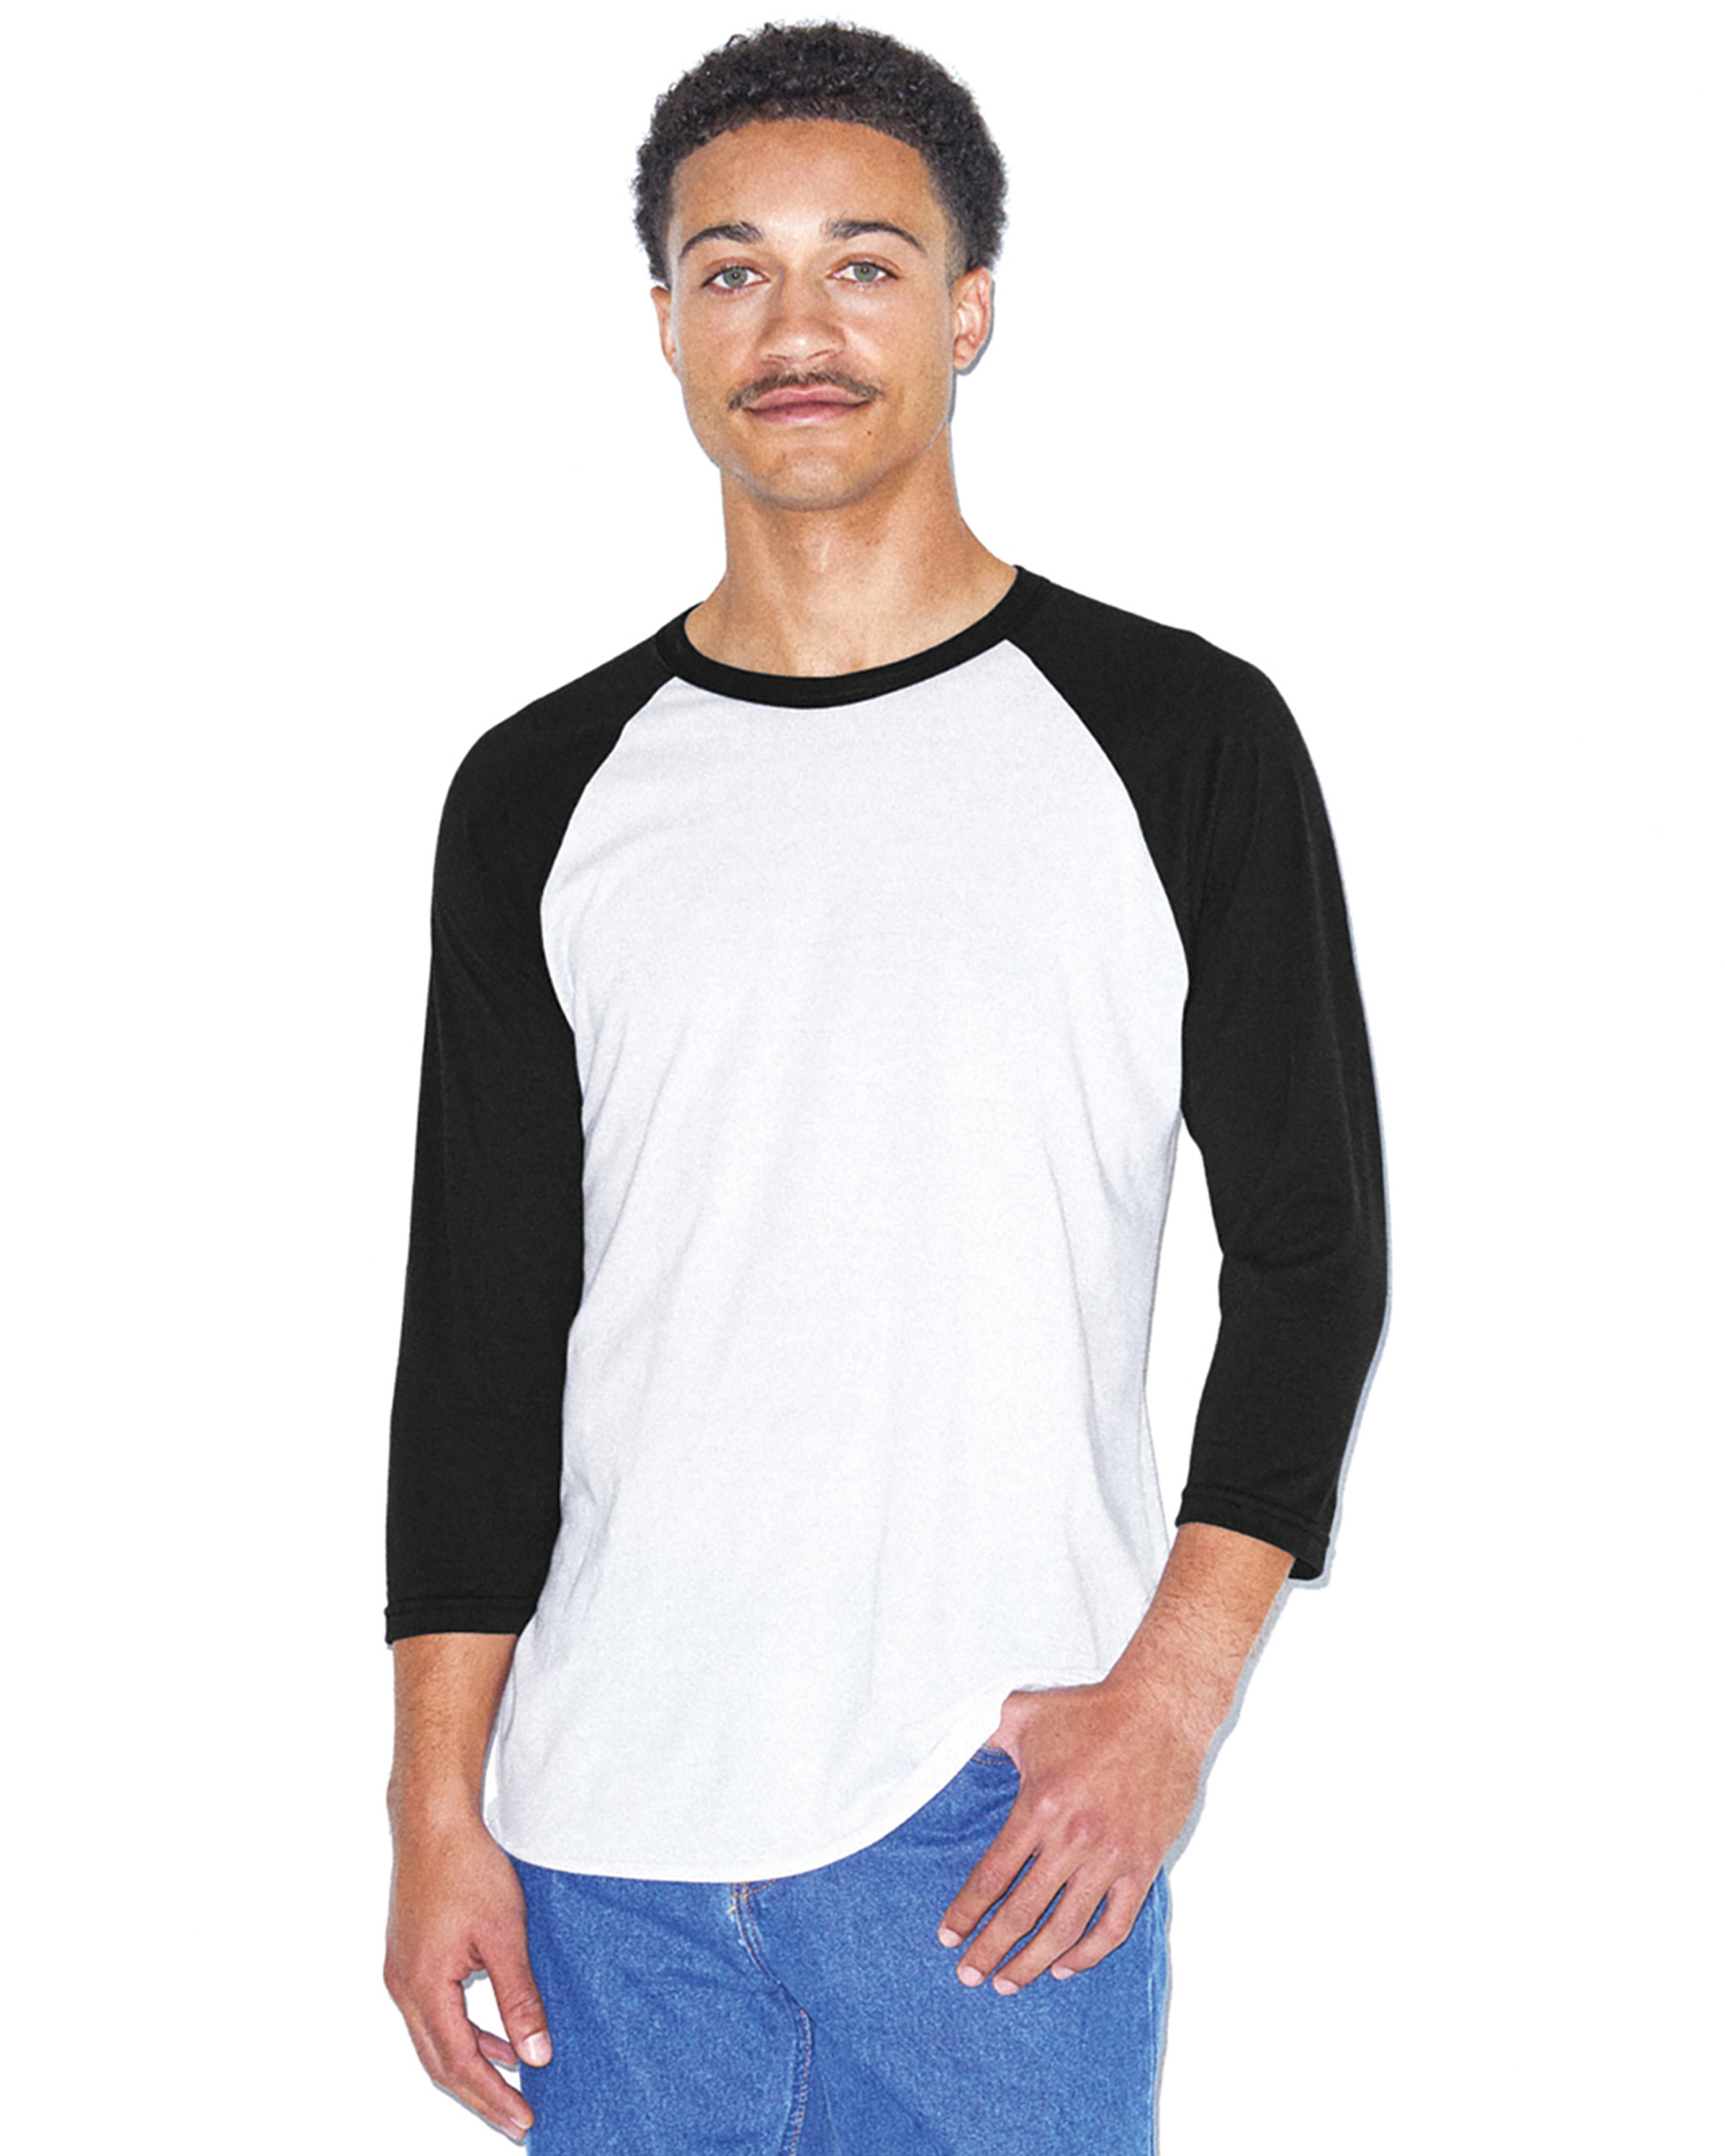 AR230 - Unisex Poly-Cotton 3/4 Sleeve Raglan T-Shirt - One Stop